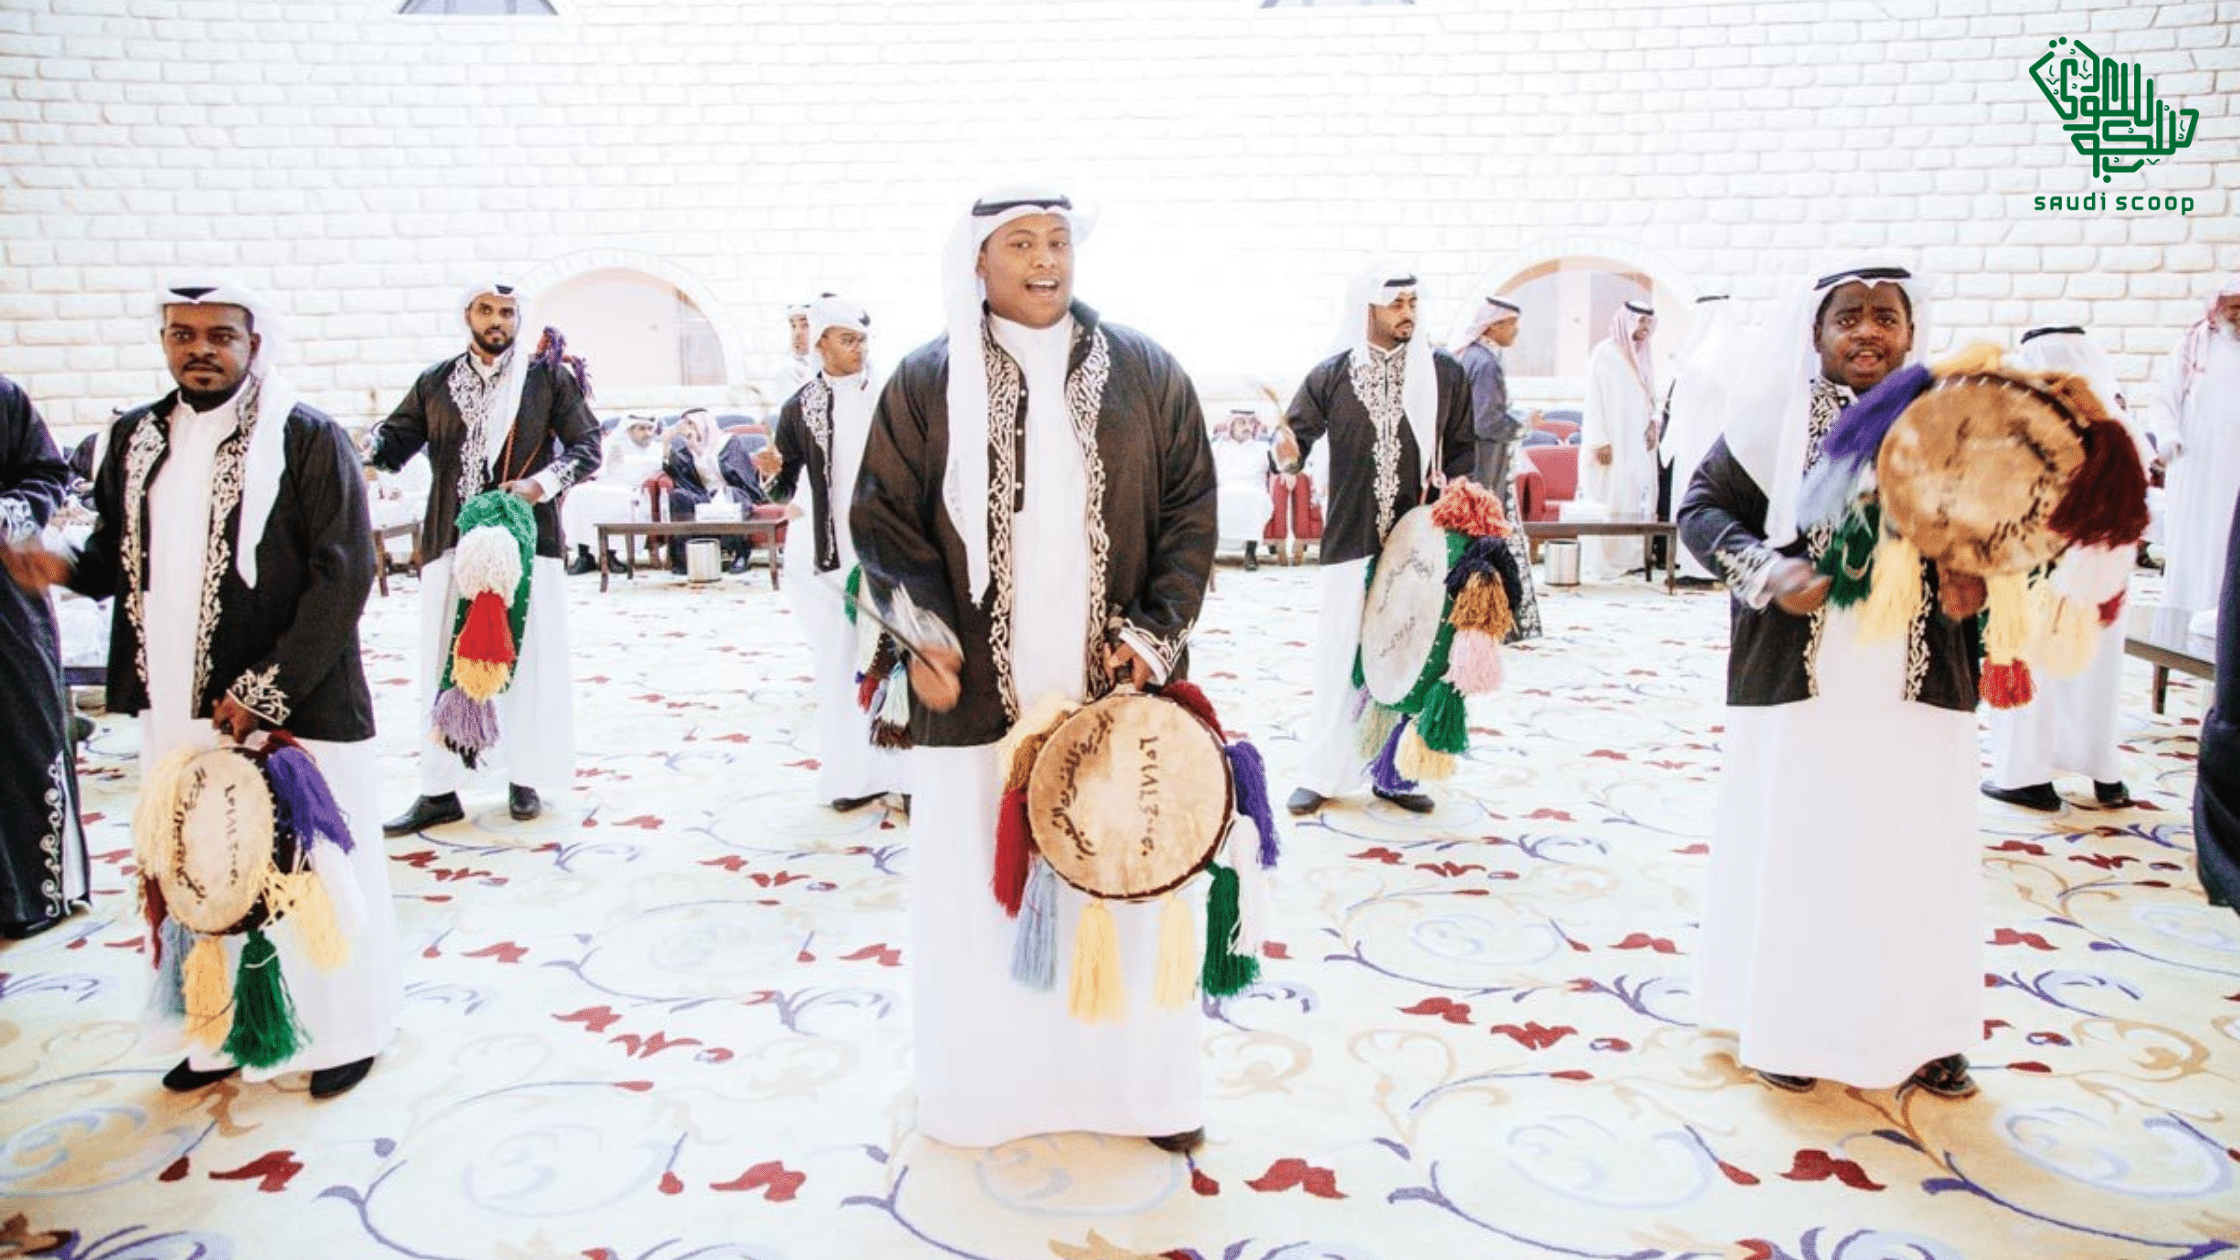 Al-Ardha - The Warriors Dance in Riyadh